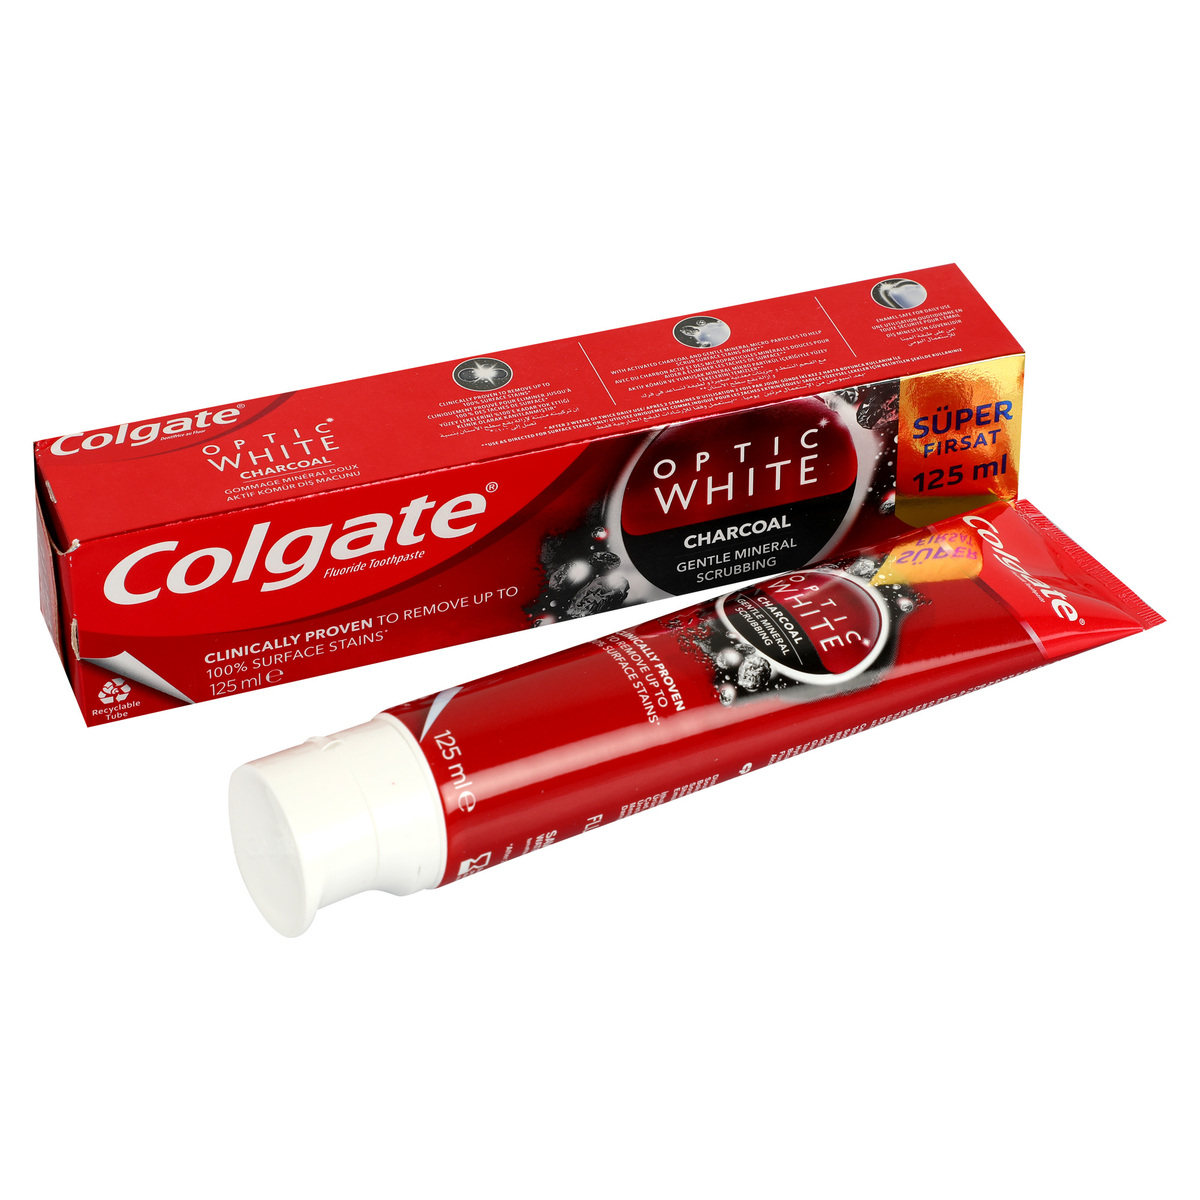 Colgate Fluoride Toothpaste, Optic White Charcoal, 125 ml